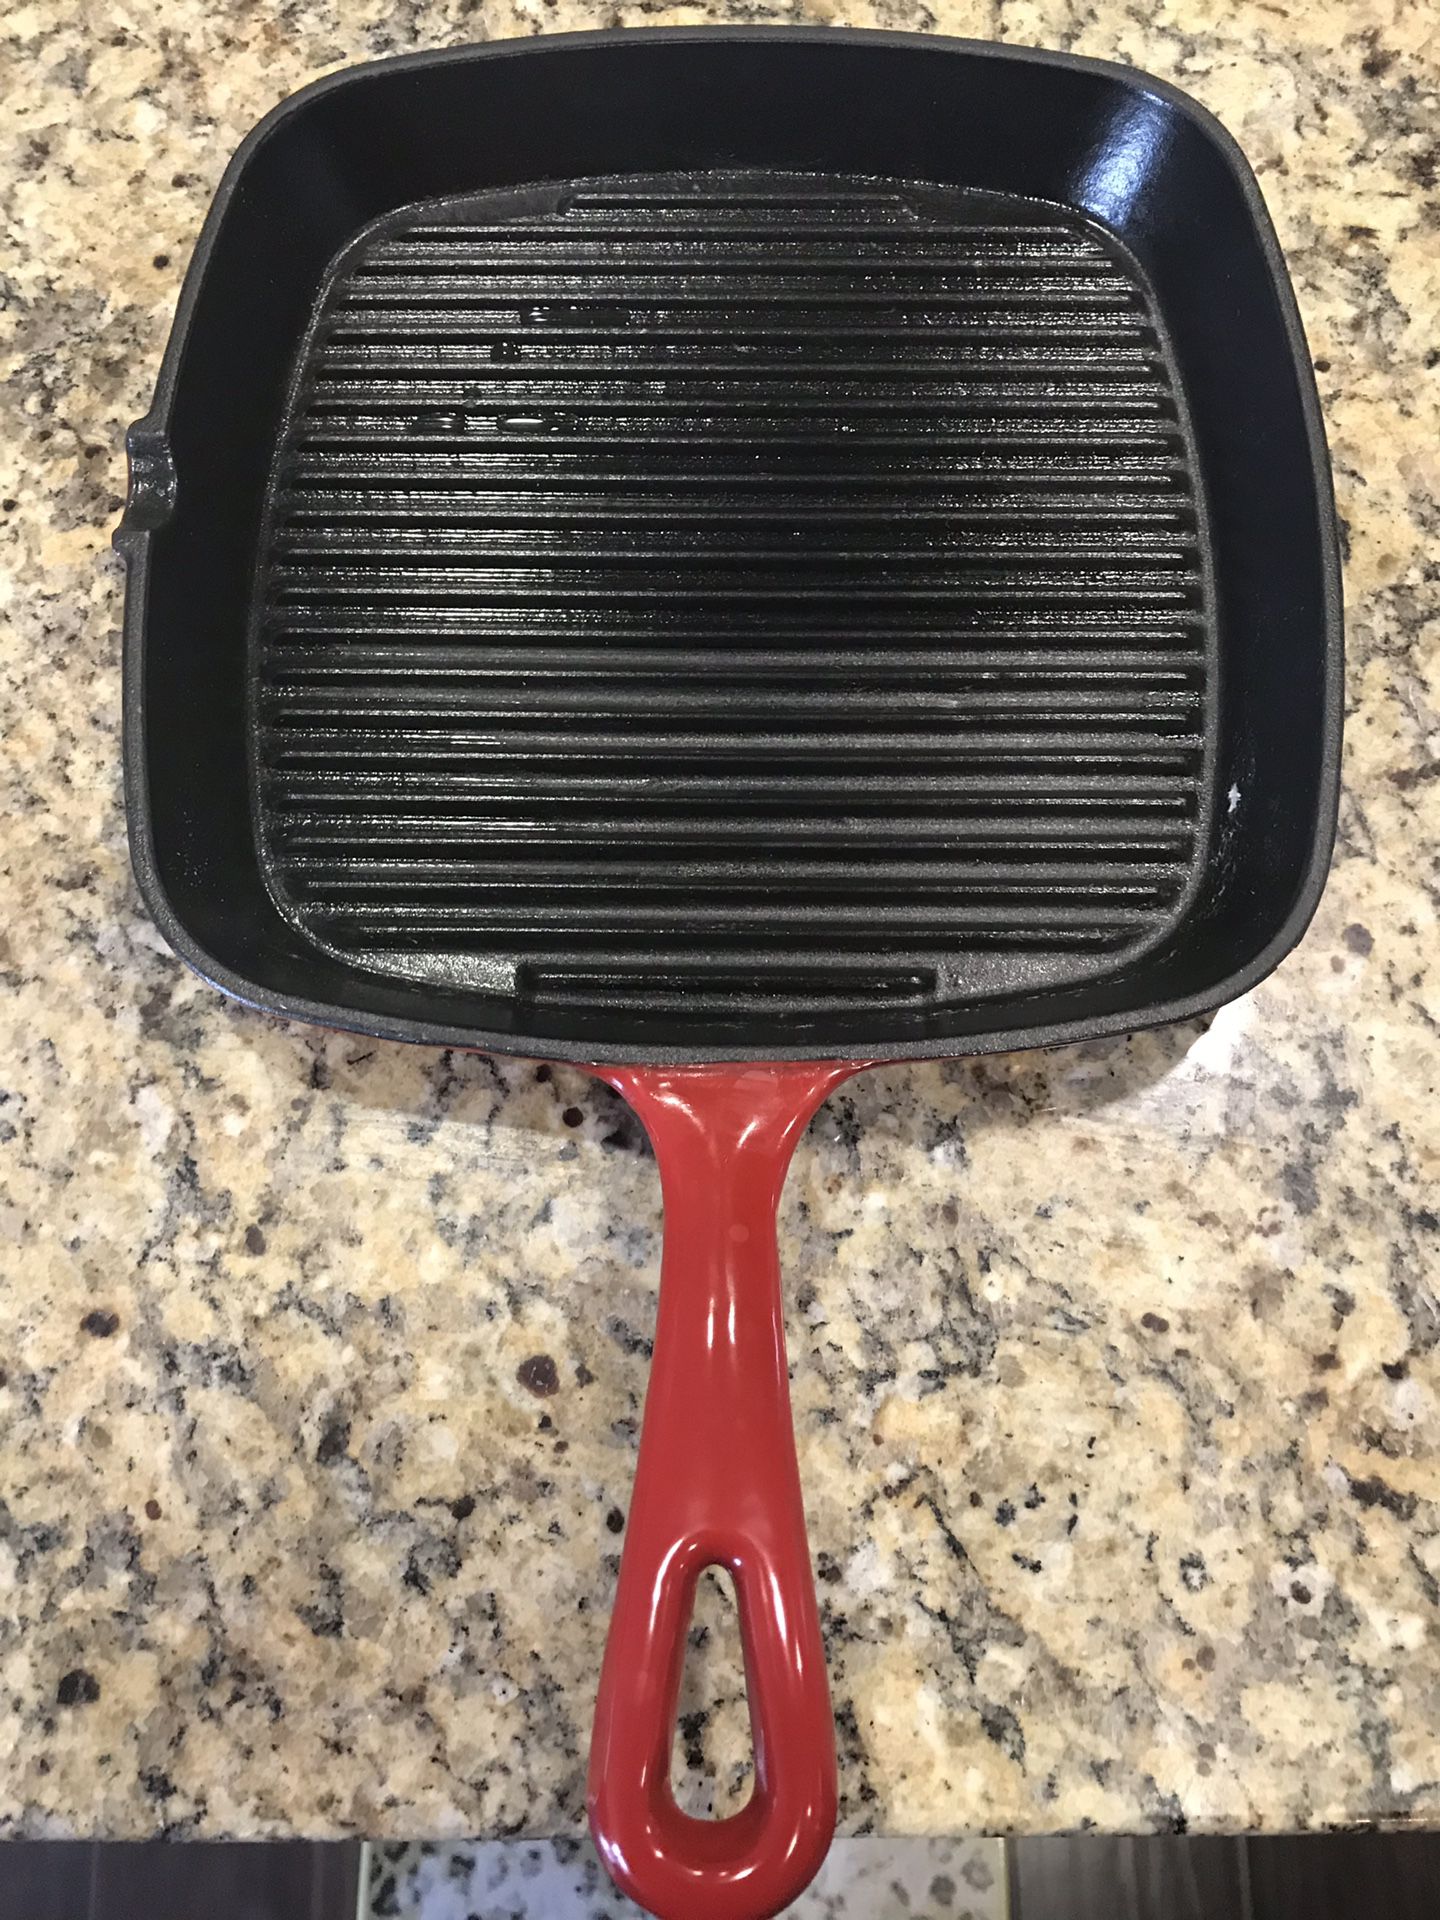 Cast Iron grill pan